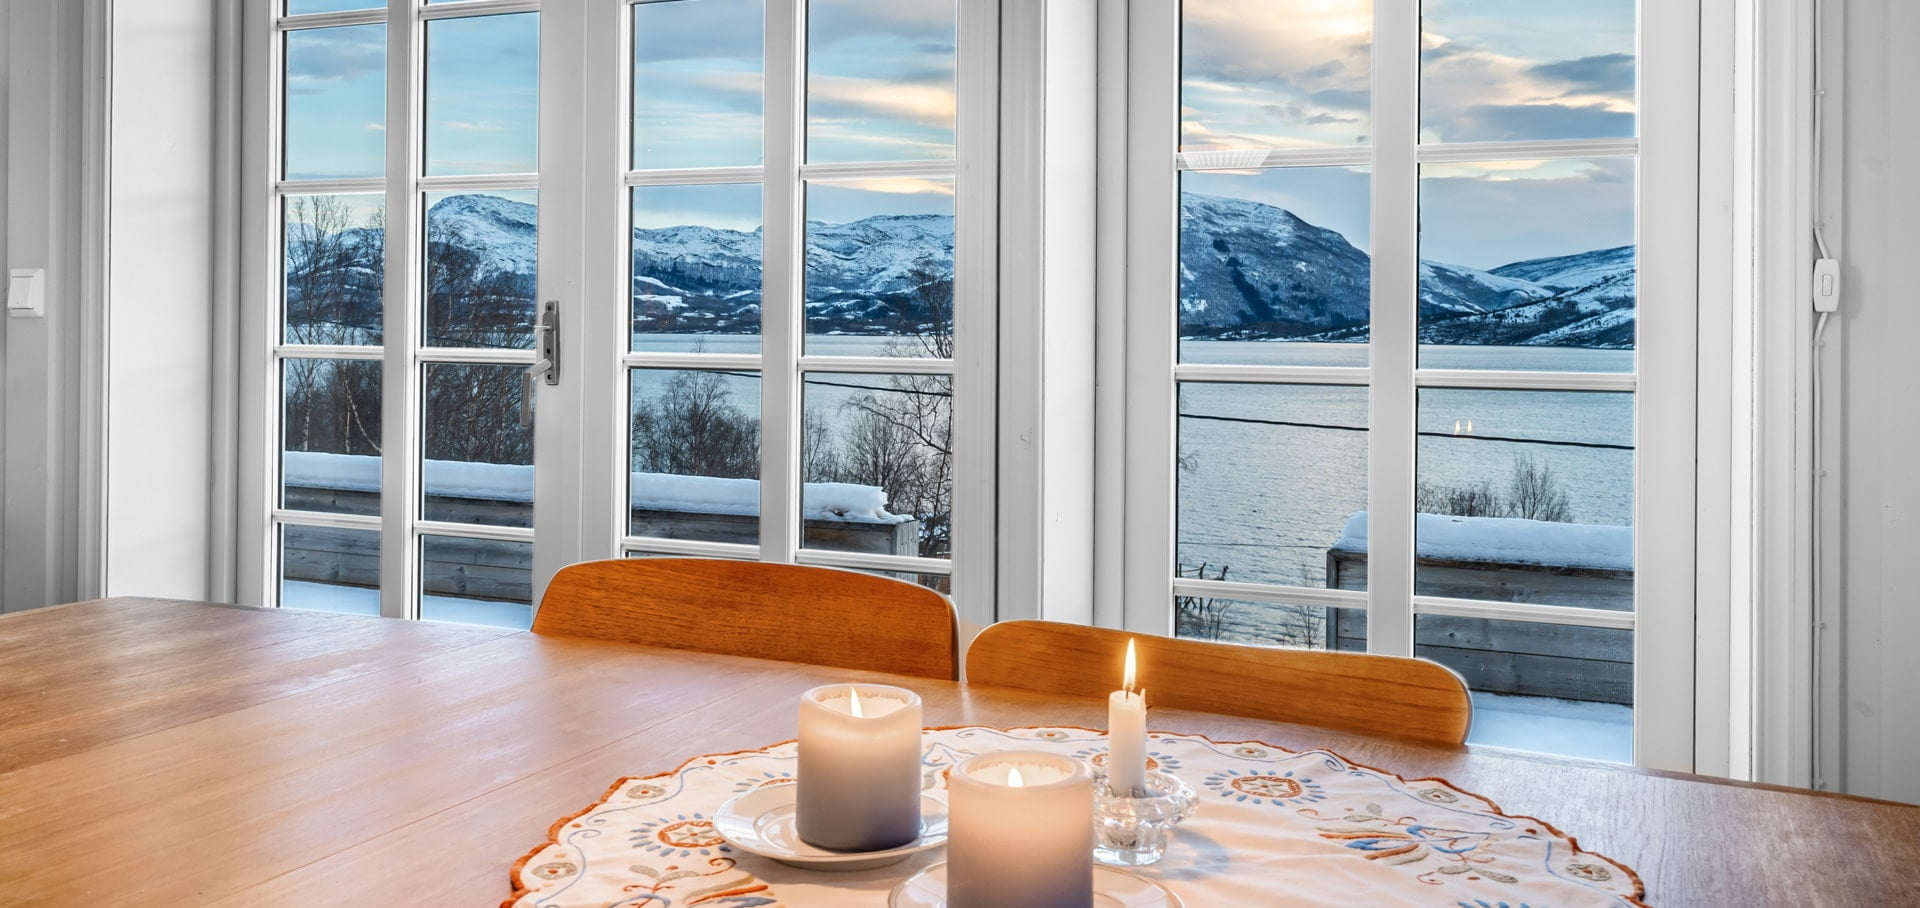 Hus for overnatting i Nord-Norge